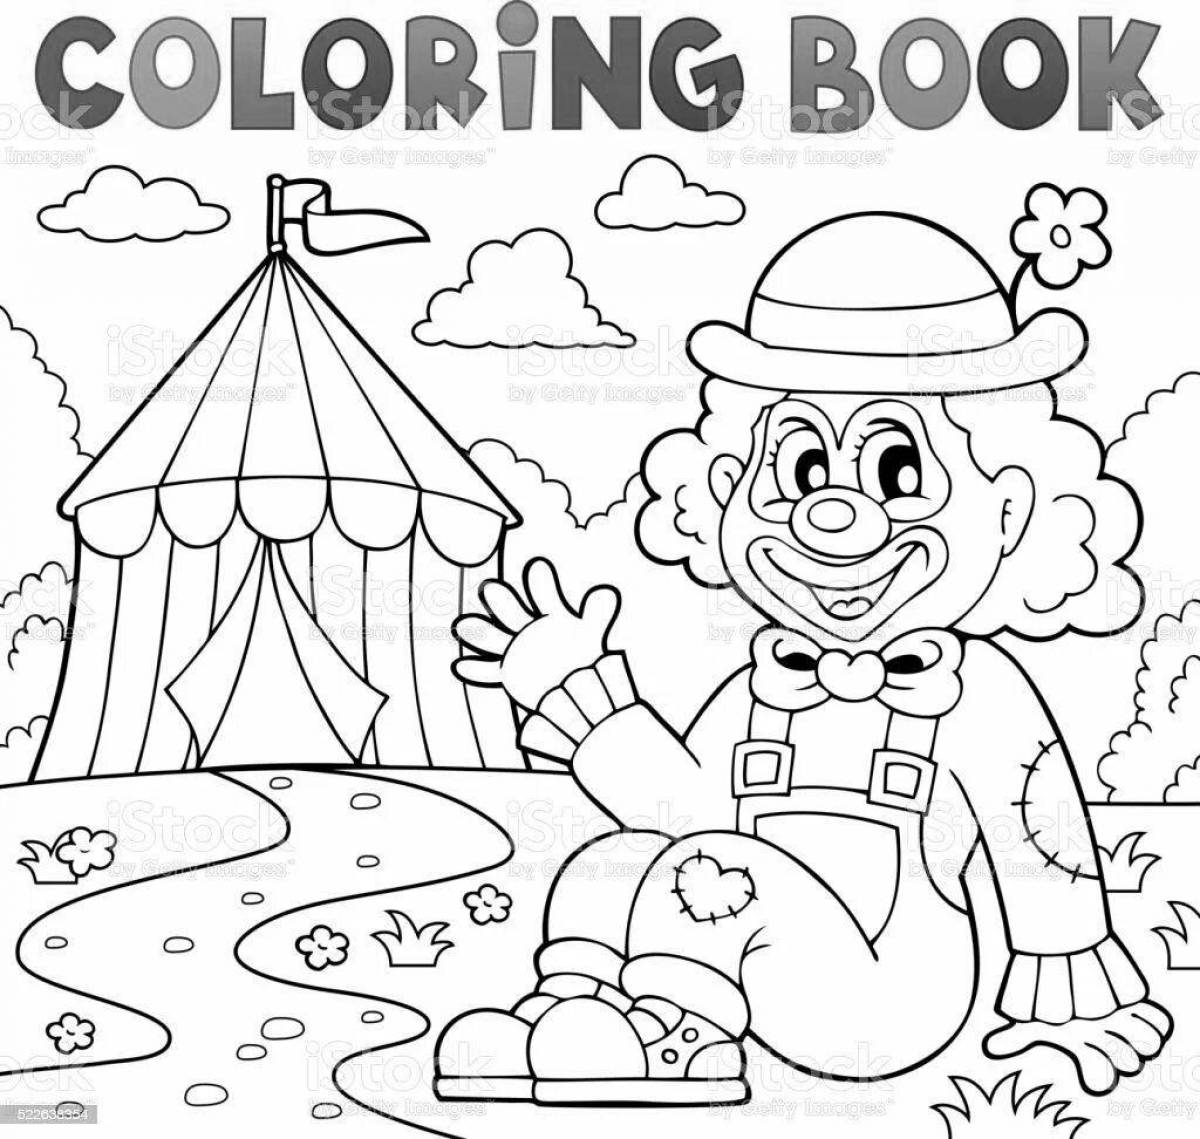 A fascinating coloring book visiting a clown